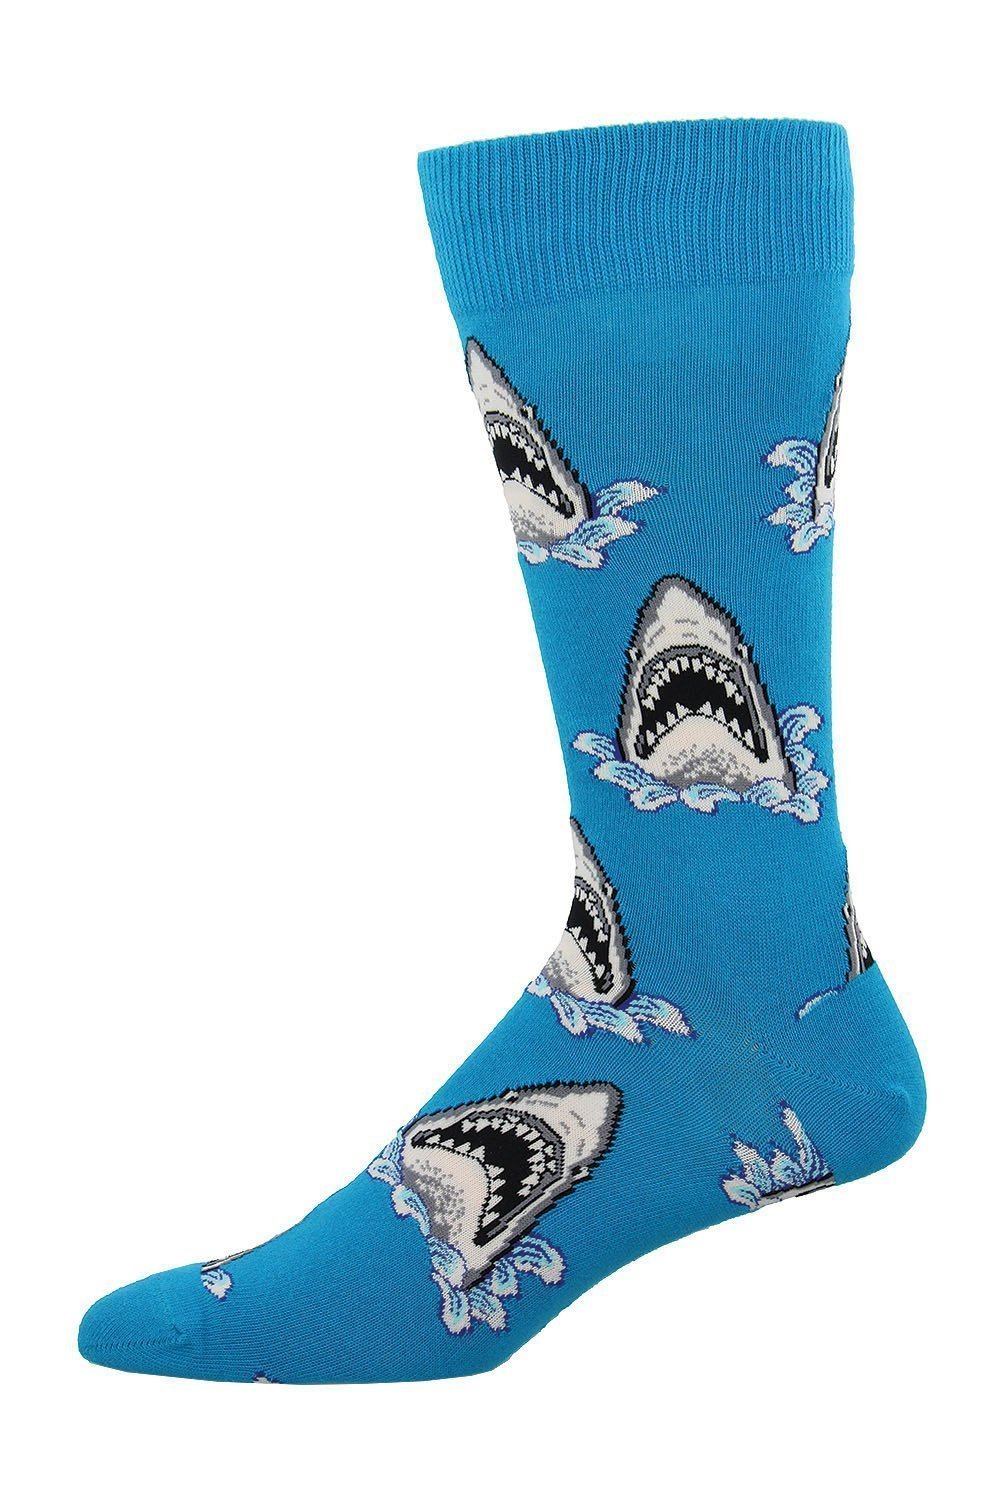 Socksmith - King Size Shark Attack Crew Socks | Men's - Knock Your Socks Off